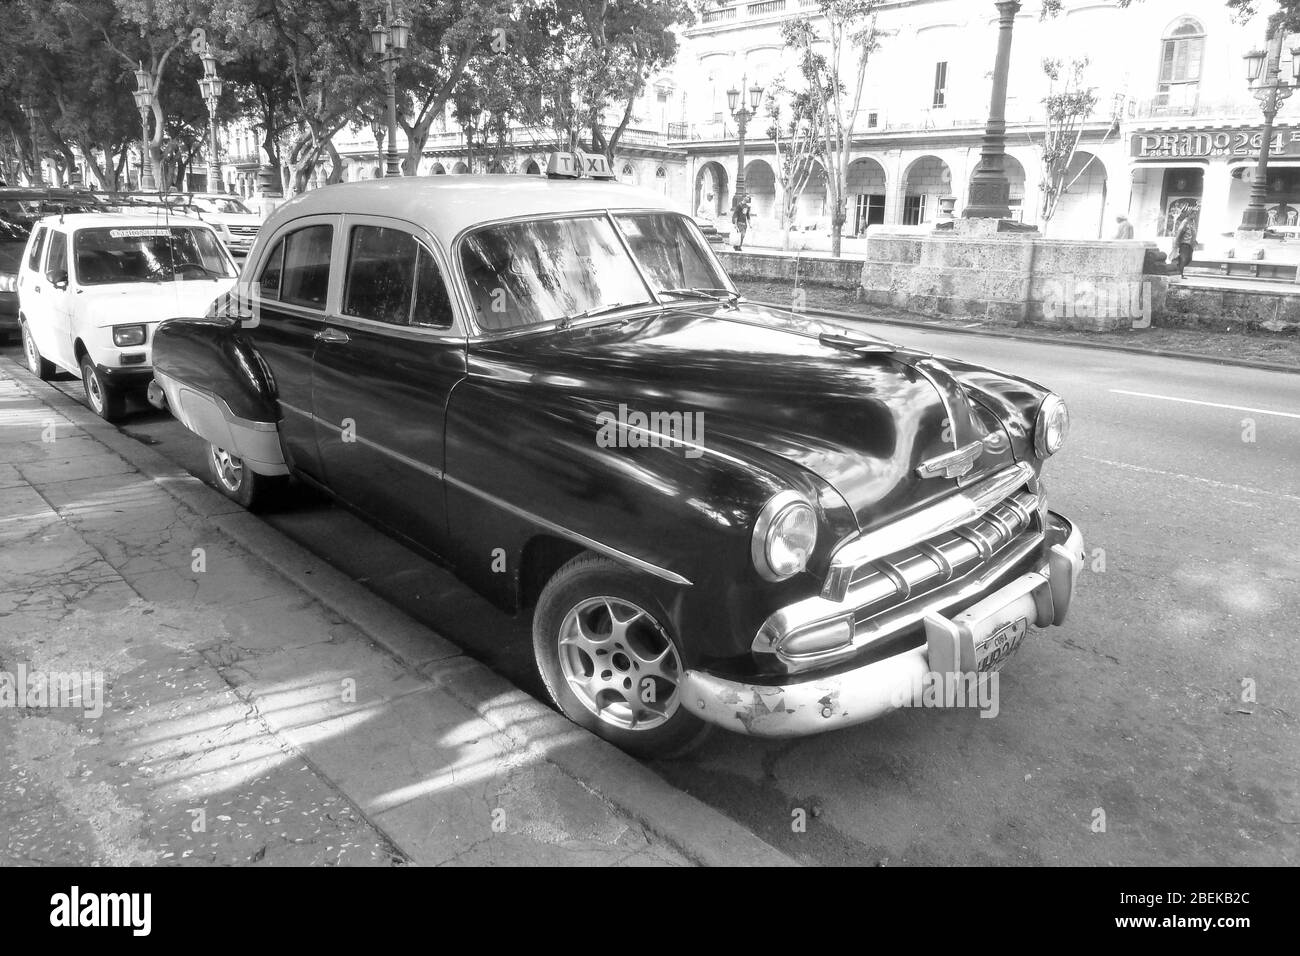 Classic American Car In Havana Cuba 2BEKB2C 